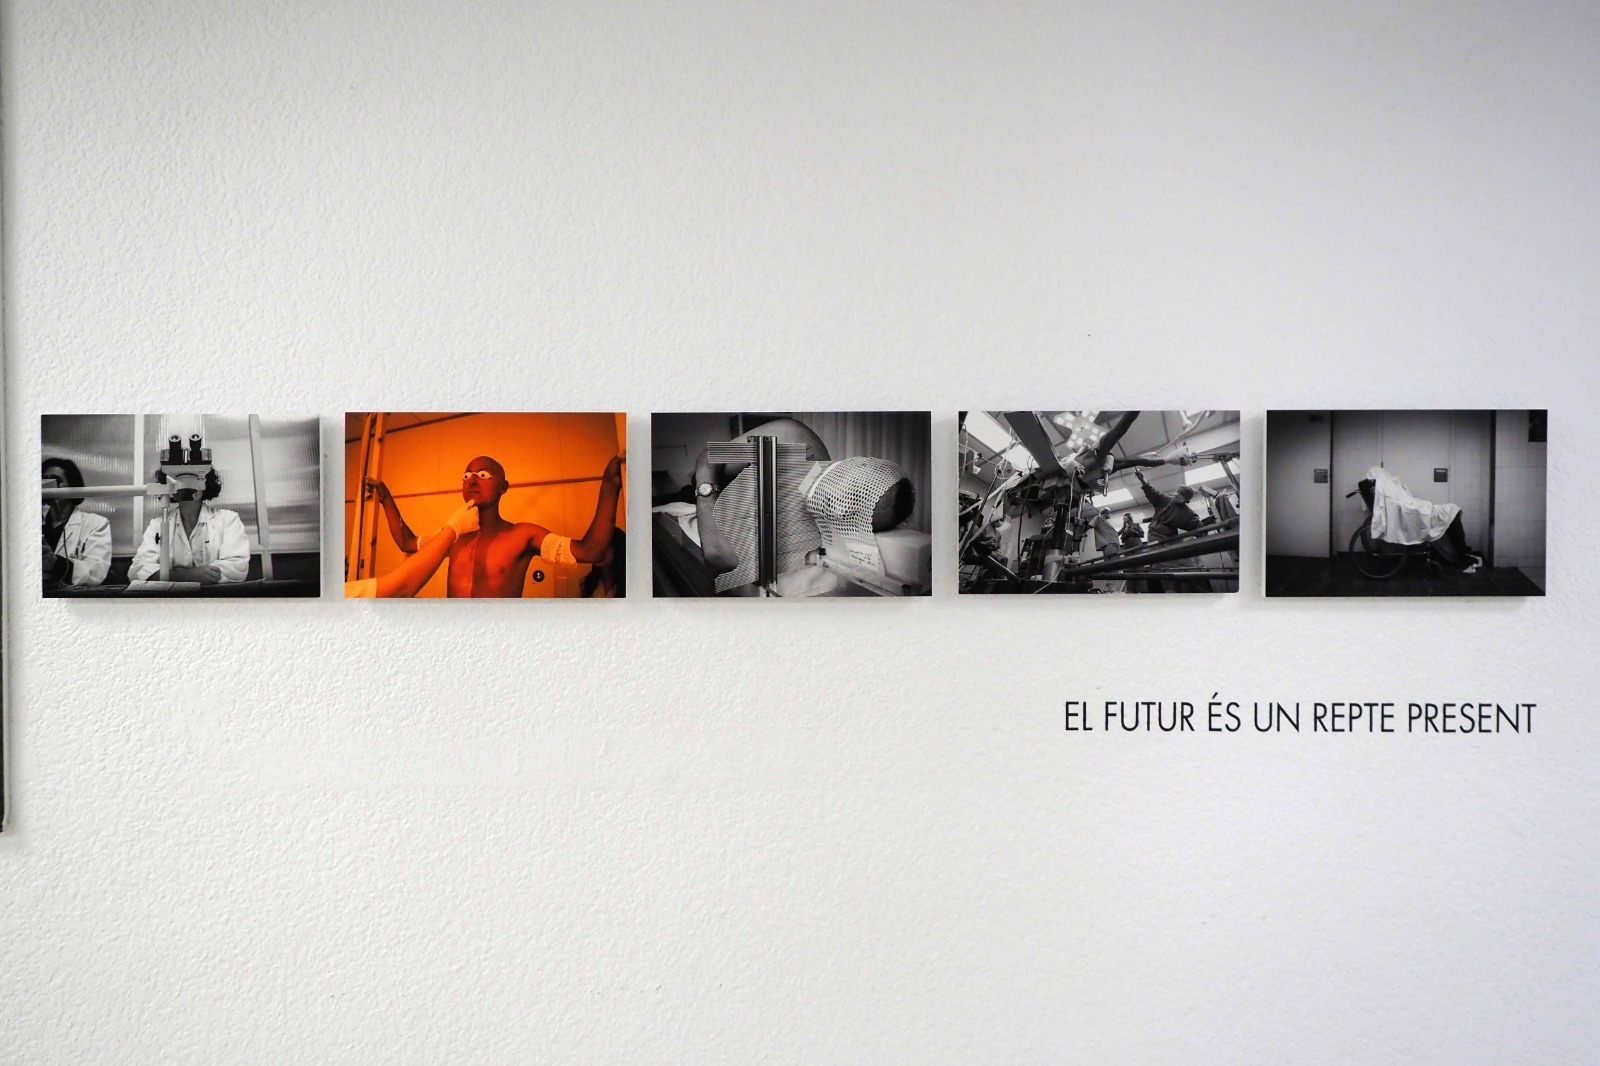 Tino Soriano and the health photography of "CURART" are exhibited at the Josep Trueta Hospital